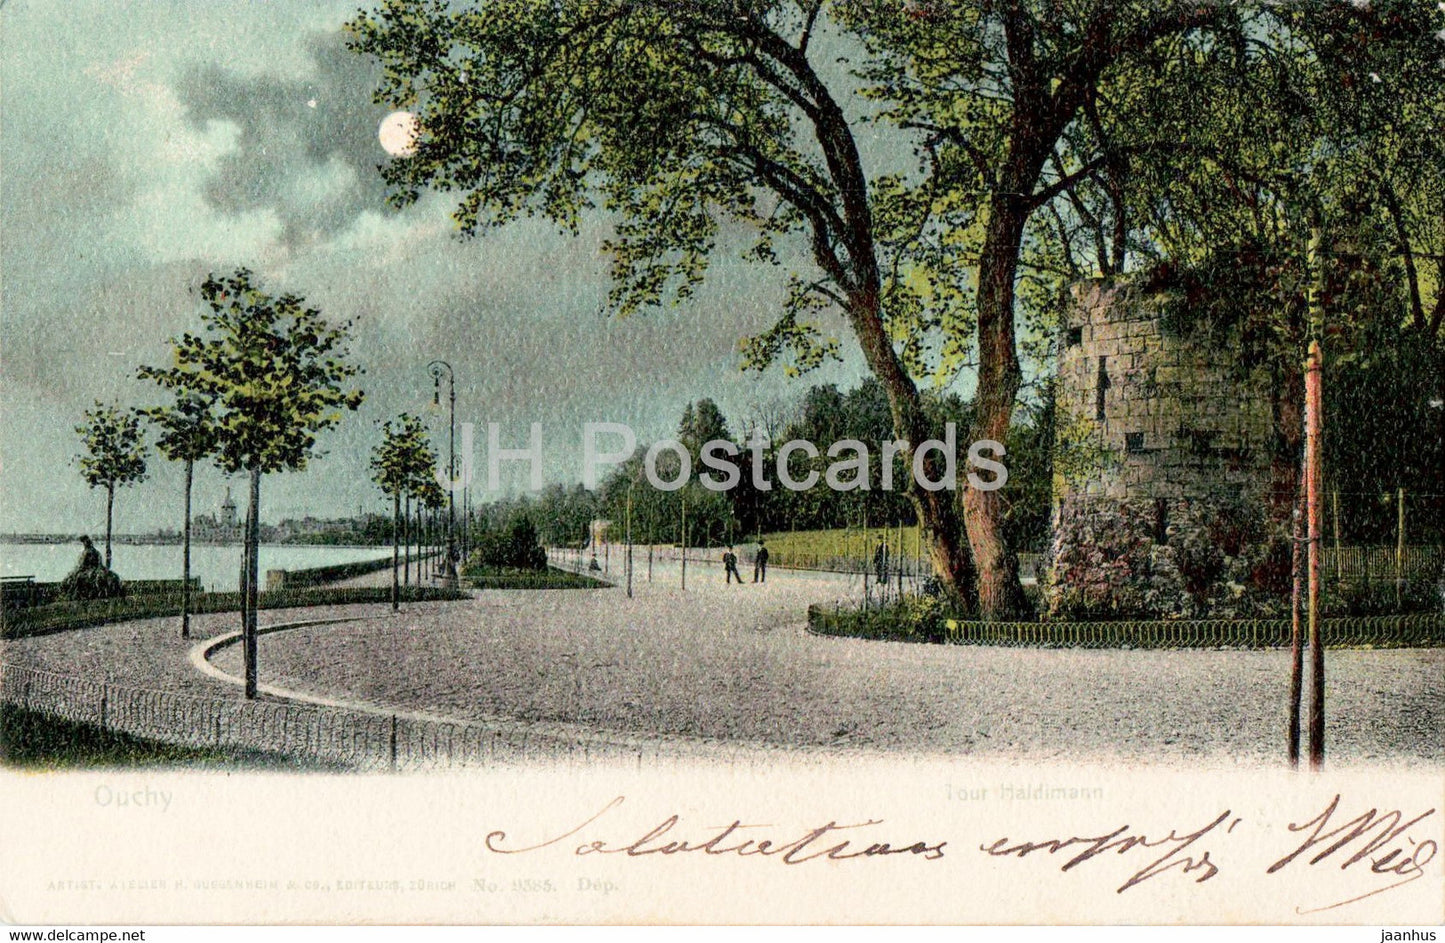 Ouchy - Tour Haldimann - old postcard - 1903 - Switzerland - used - JH Postcards